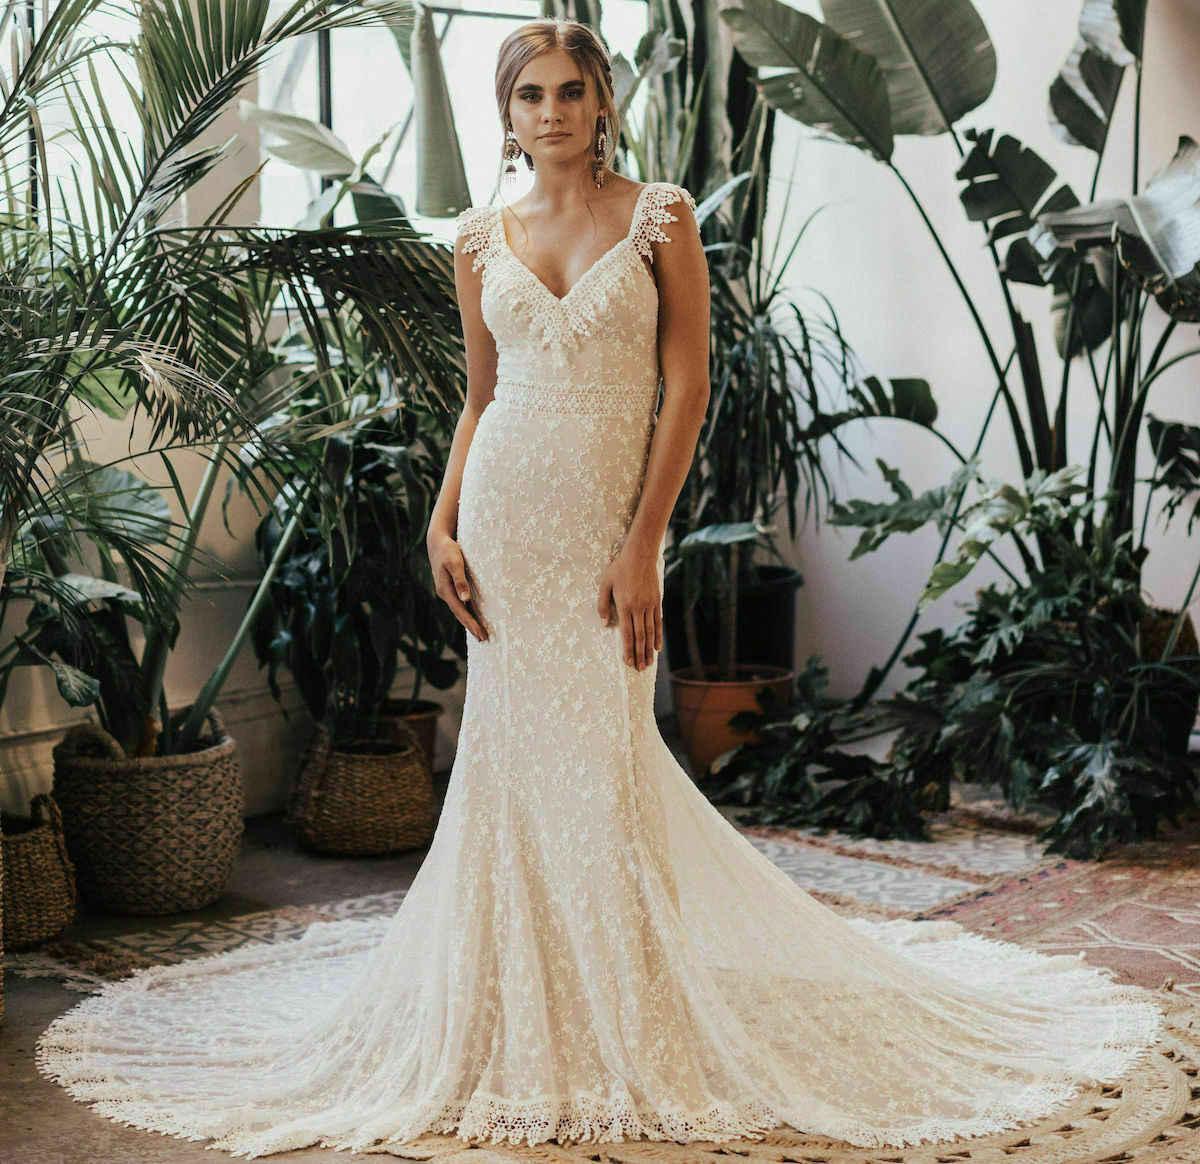 white lace tight wedding dress